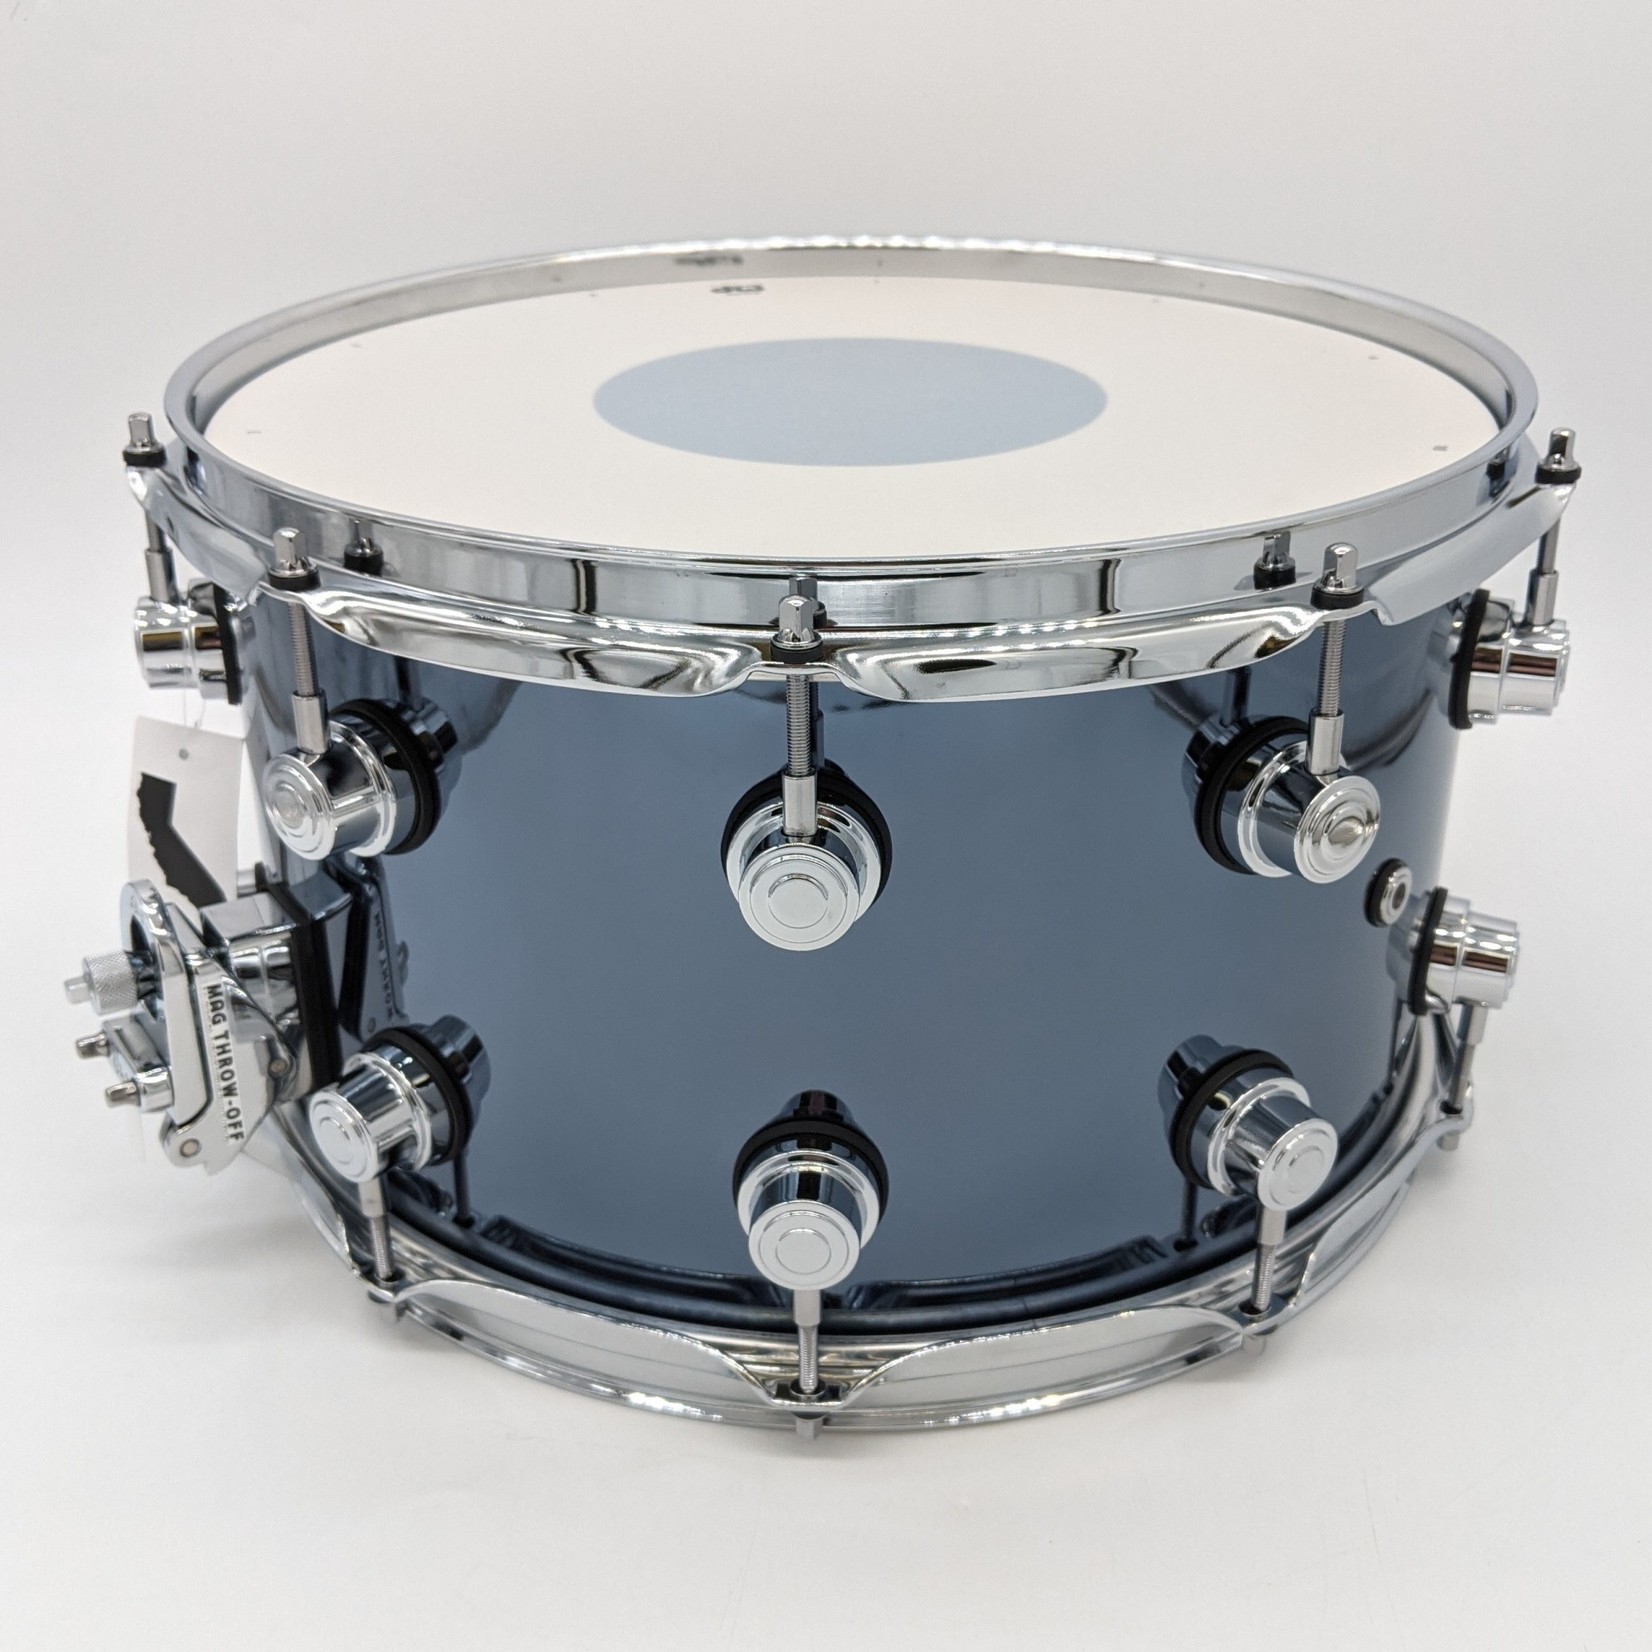 DW DW Performance Series 8x14" Snare Drum (Chrome Shadow)